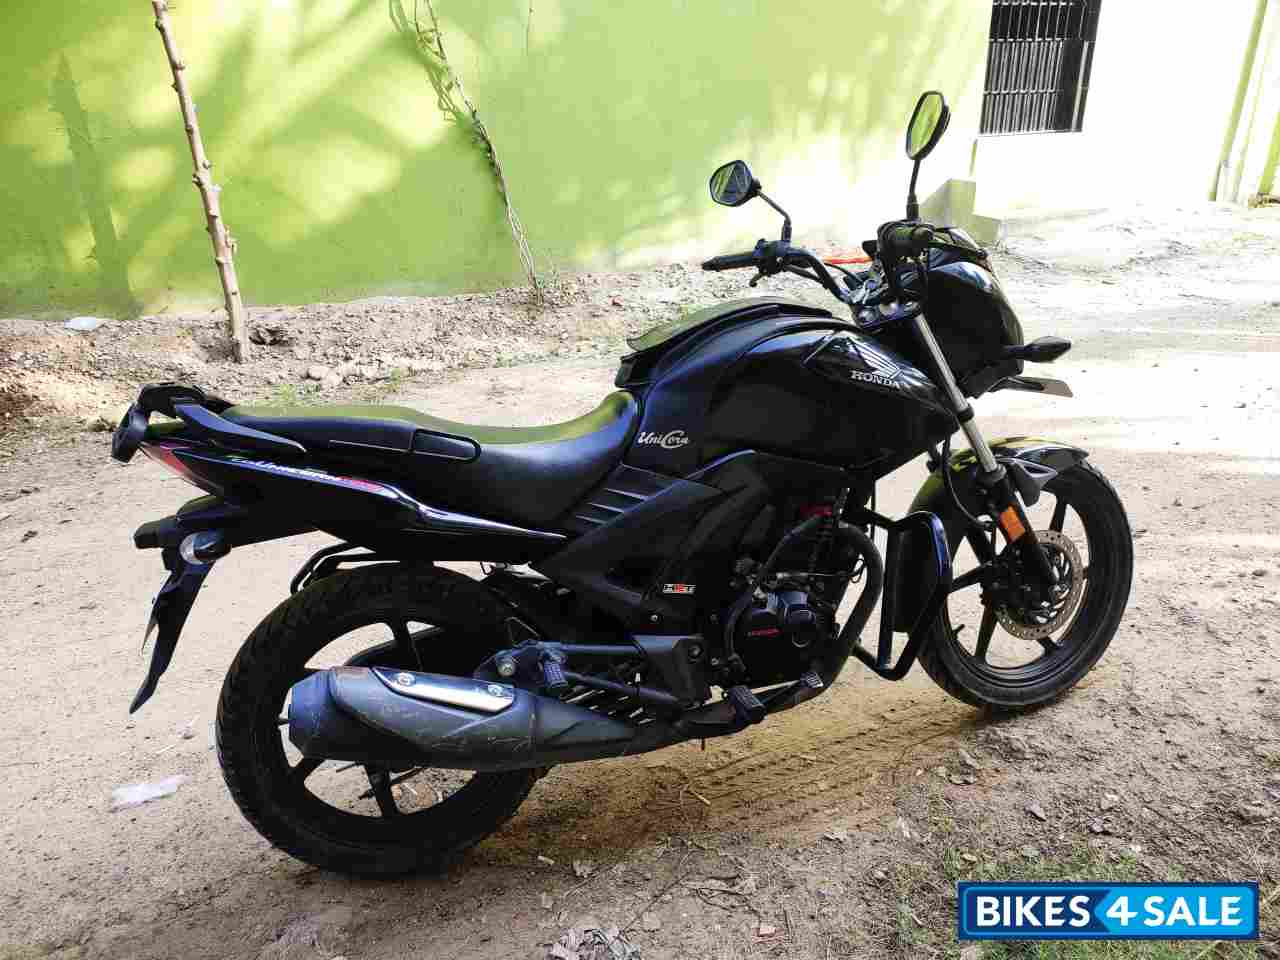 Used 2016 model Honda CB Unicorn 160 for sale in Chennai. ID 260574 ...